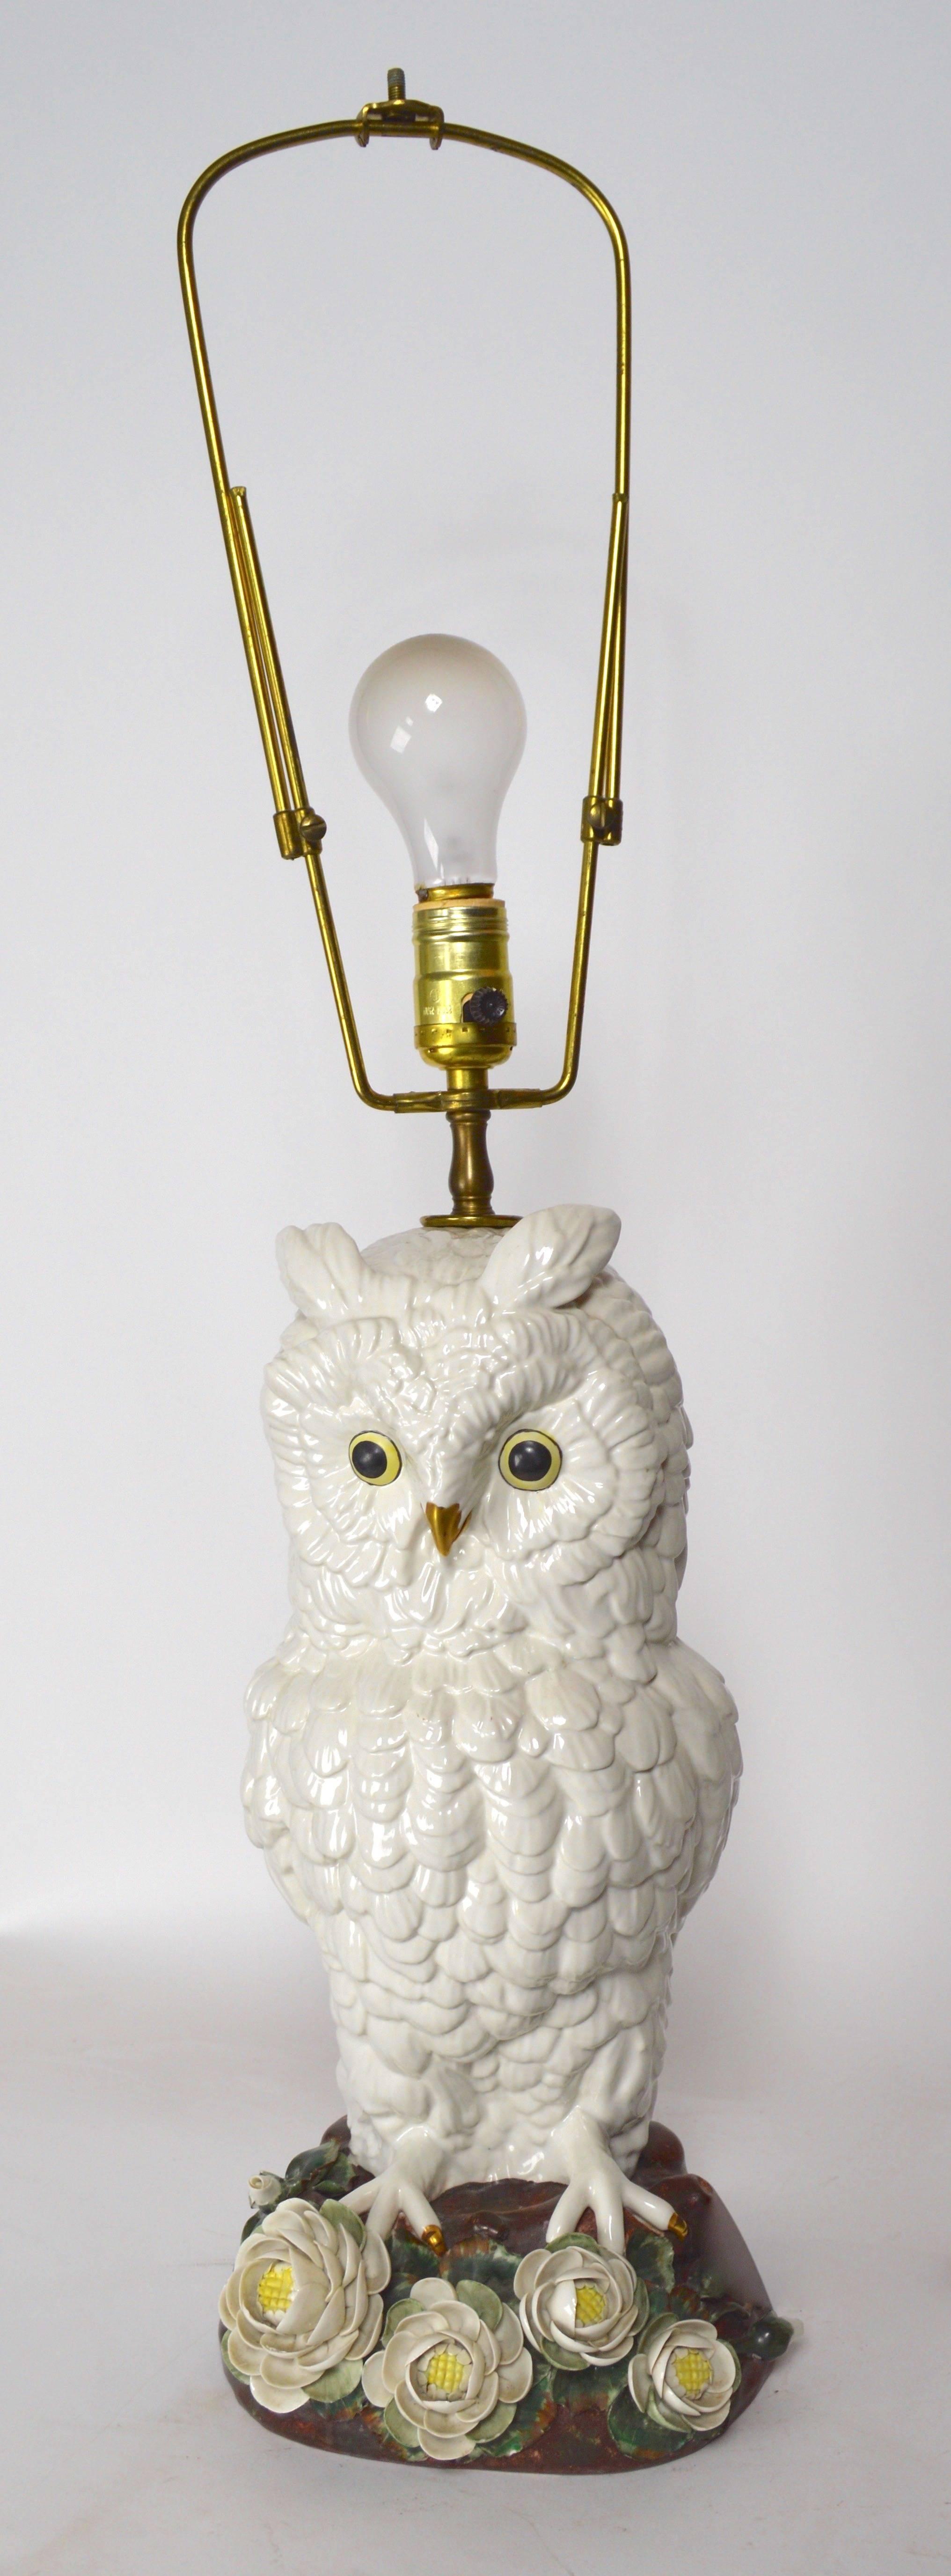 Ceramic Majolica Owl Lamp Made in Italy for Mottahedeh 1